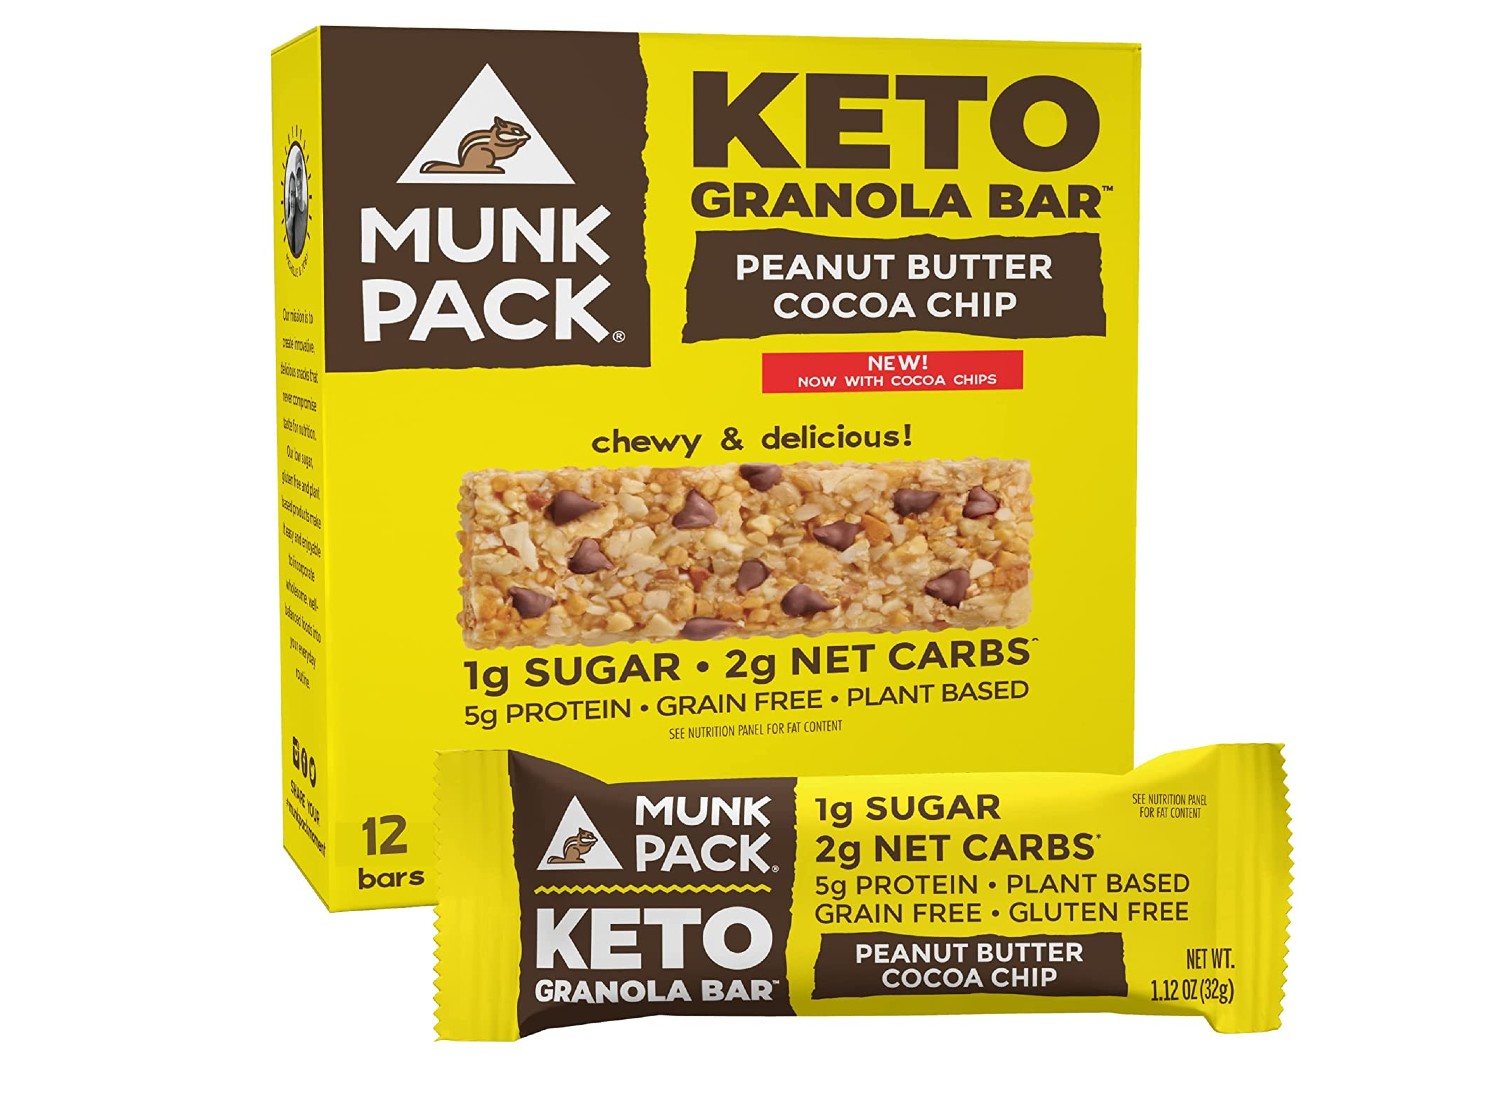 The Munk Pack Keto Granola Bar sold on Amazon